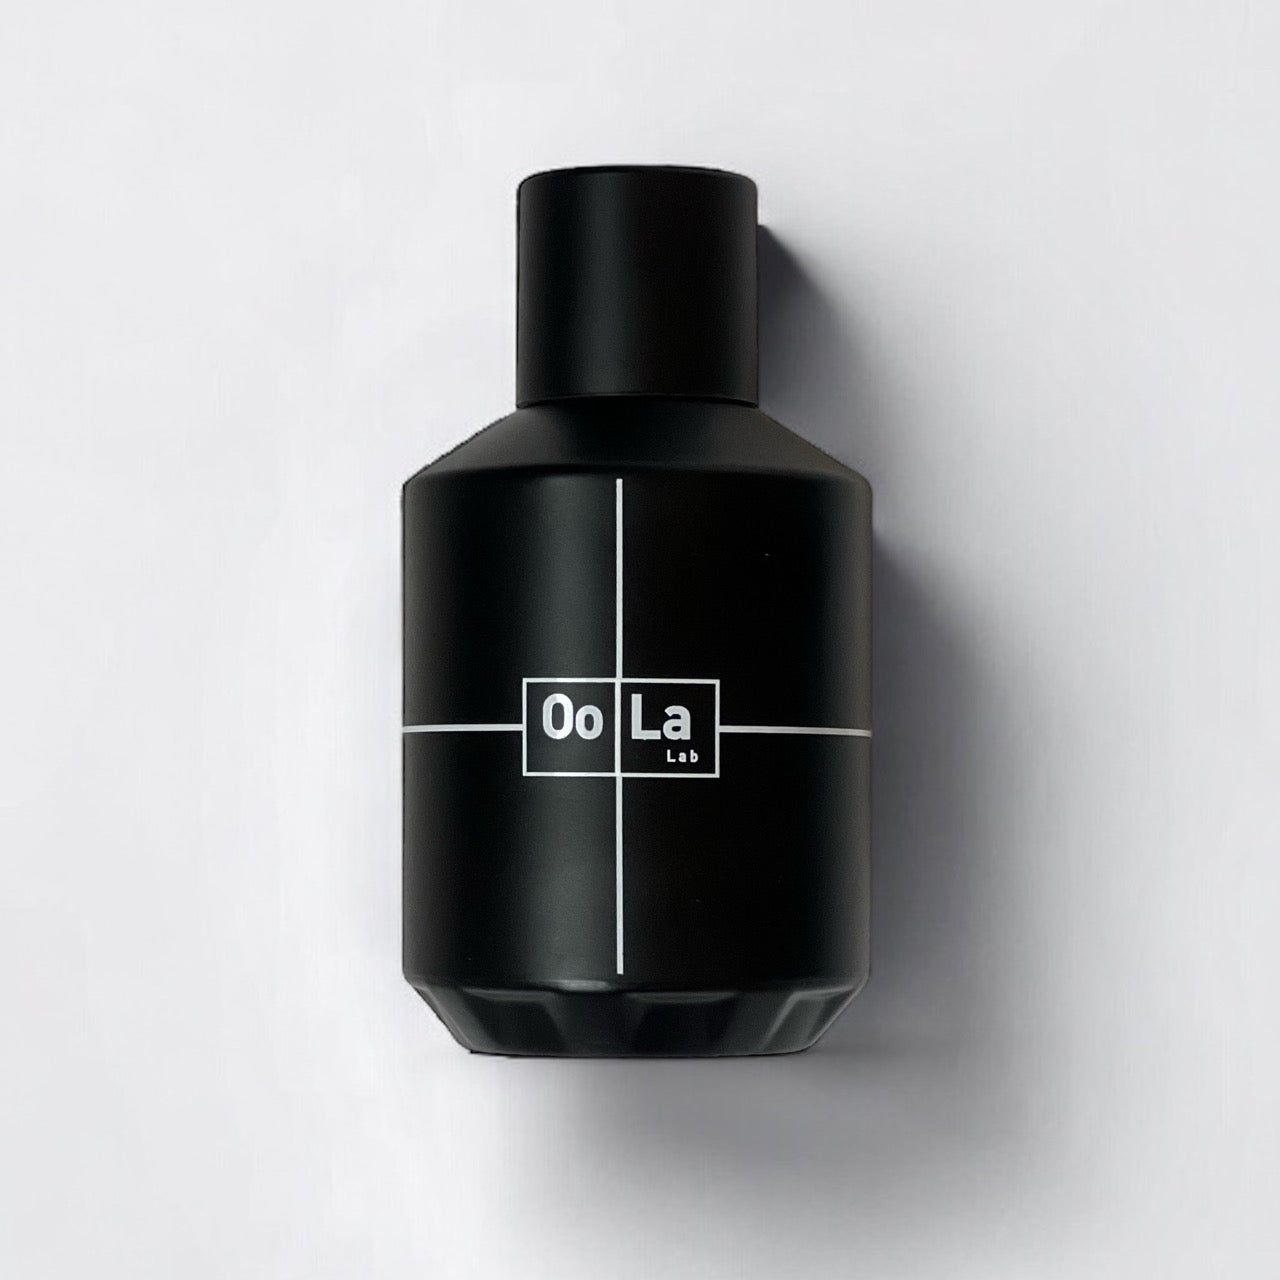 SKIN Eau de Parfum (100ml) - Oo La Lab